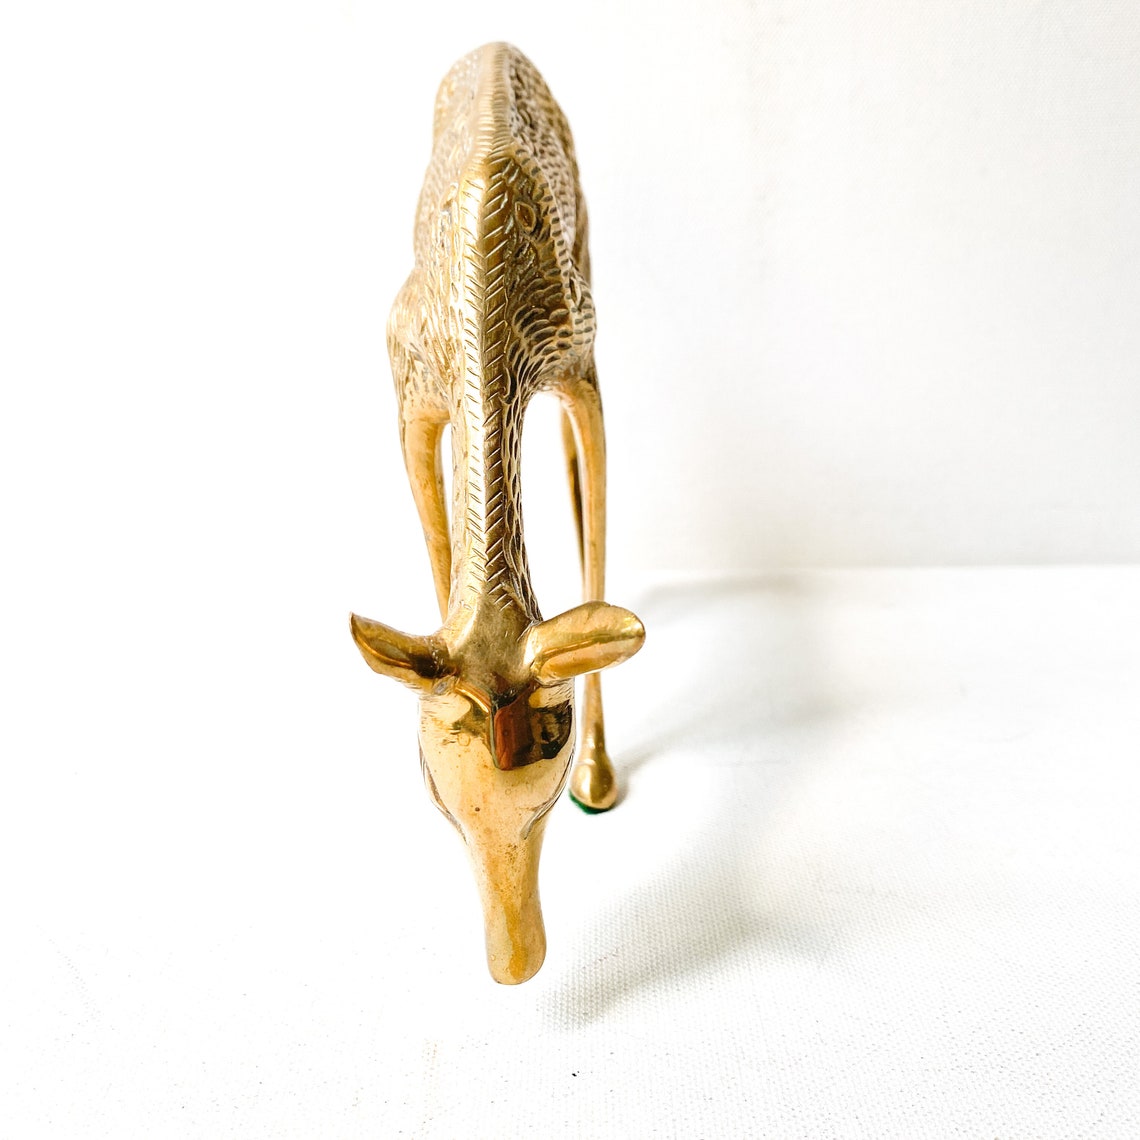 Vintage Brass Deer Sculpture, Woodland Decor